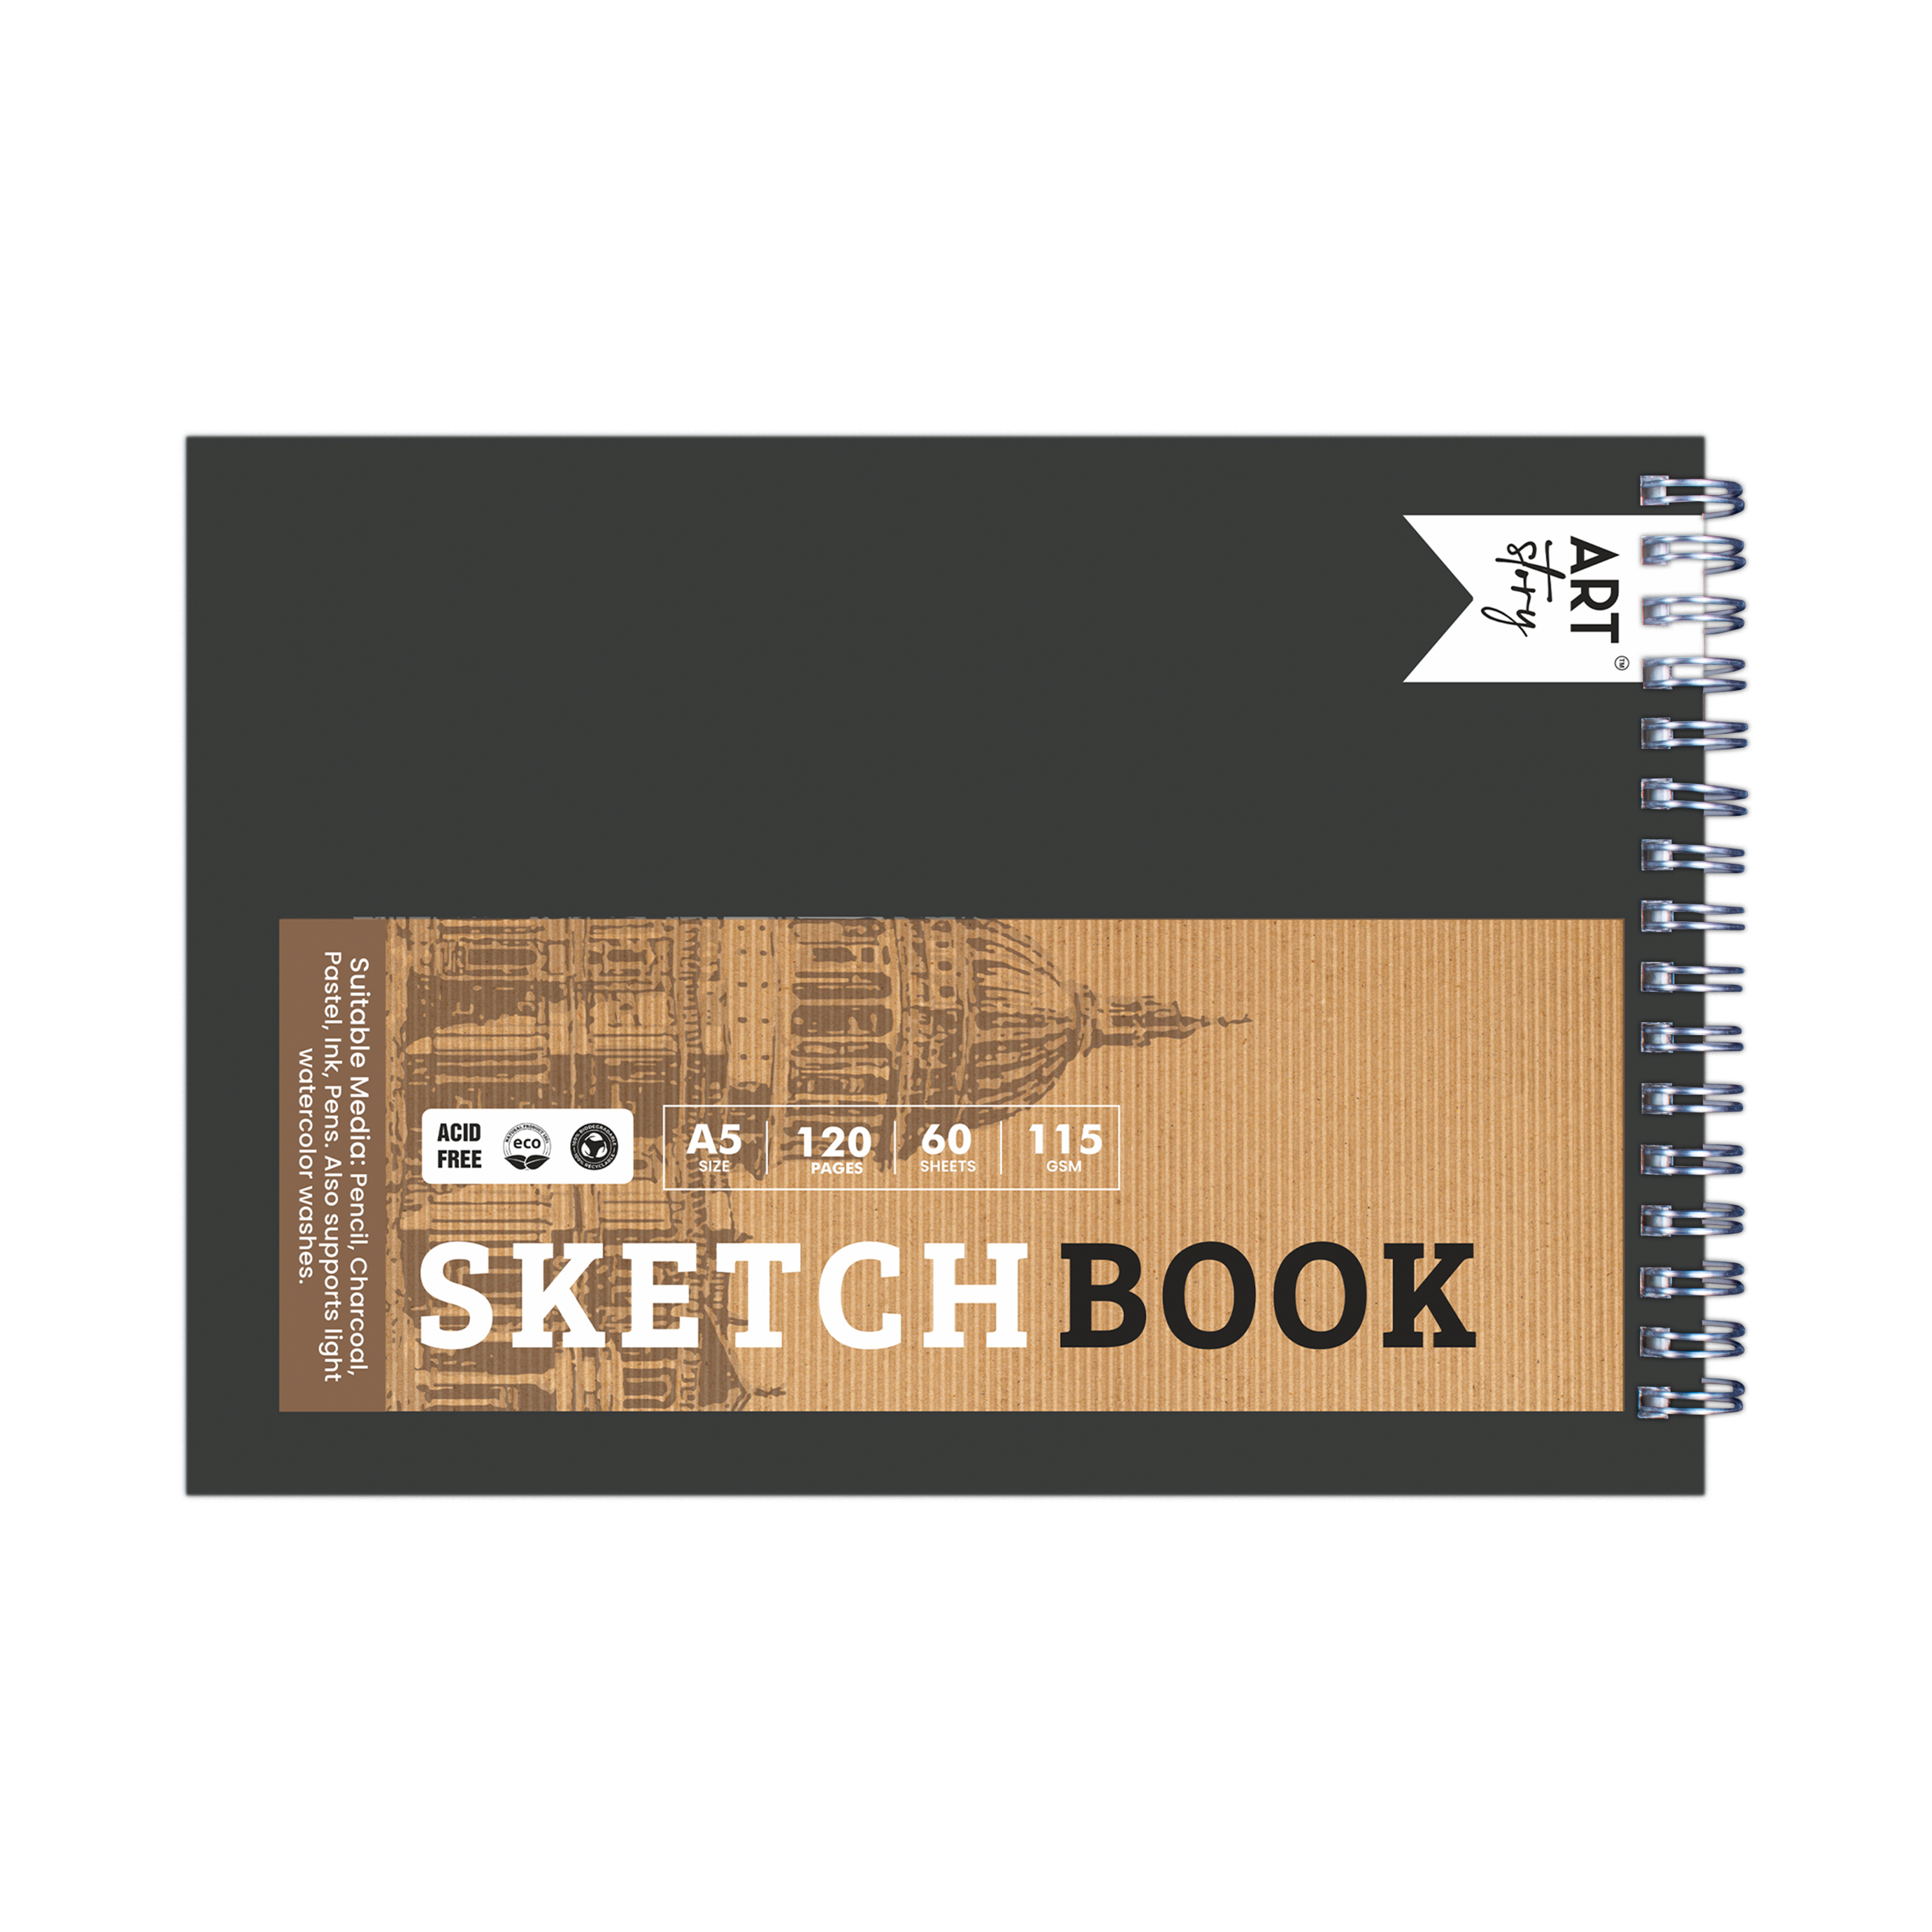 Sketchbook Wiro O Bound Artist Paper A5 115gsm 60Sheets 1 Book